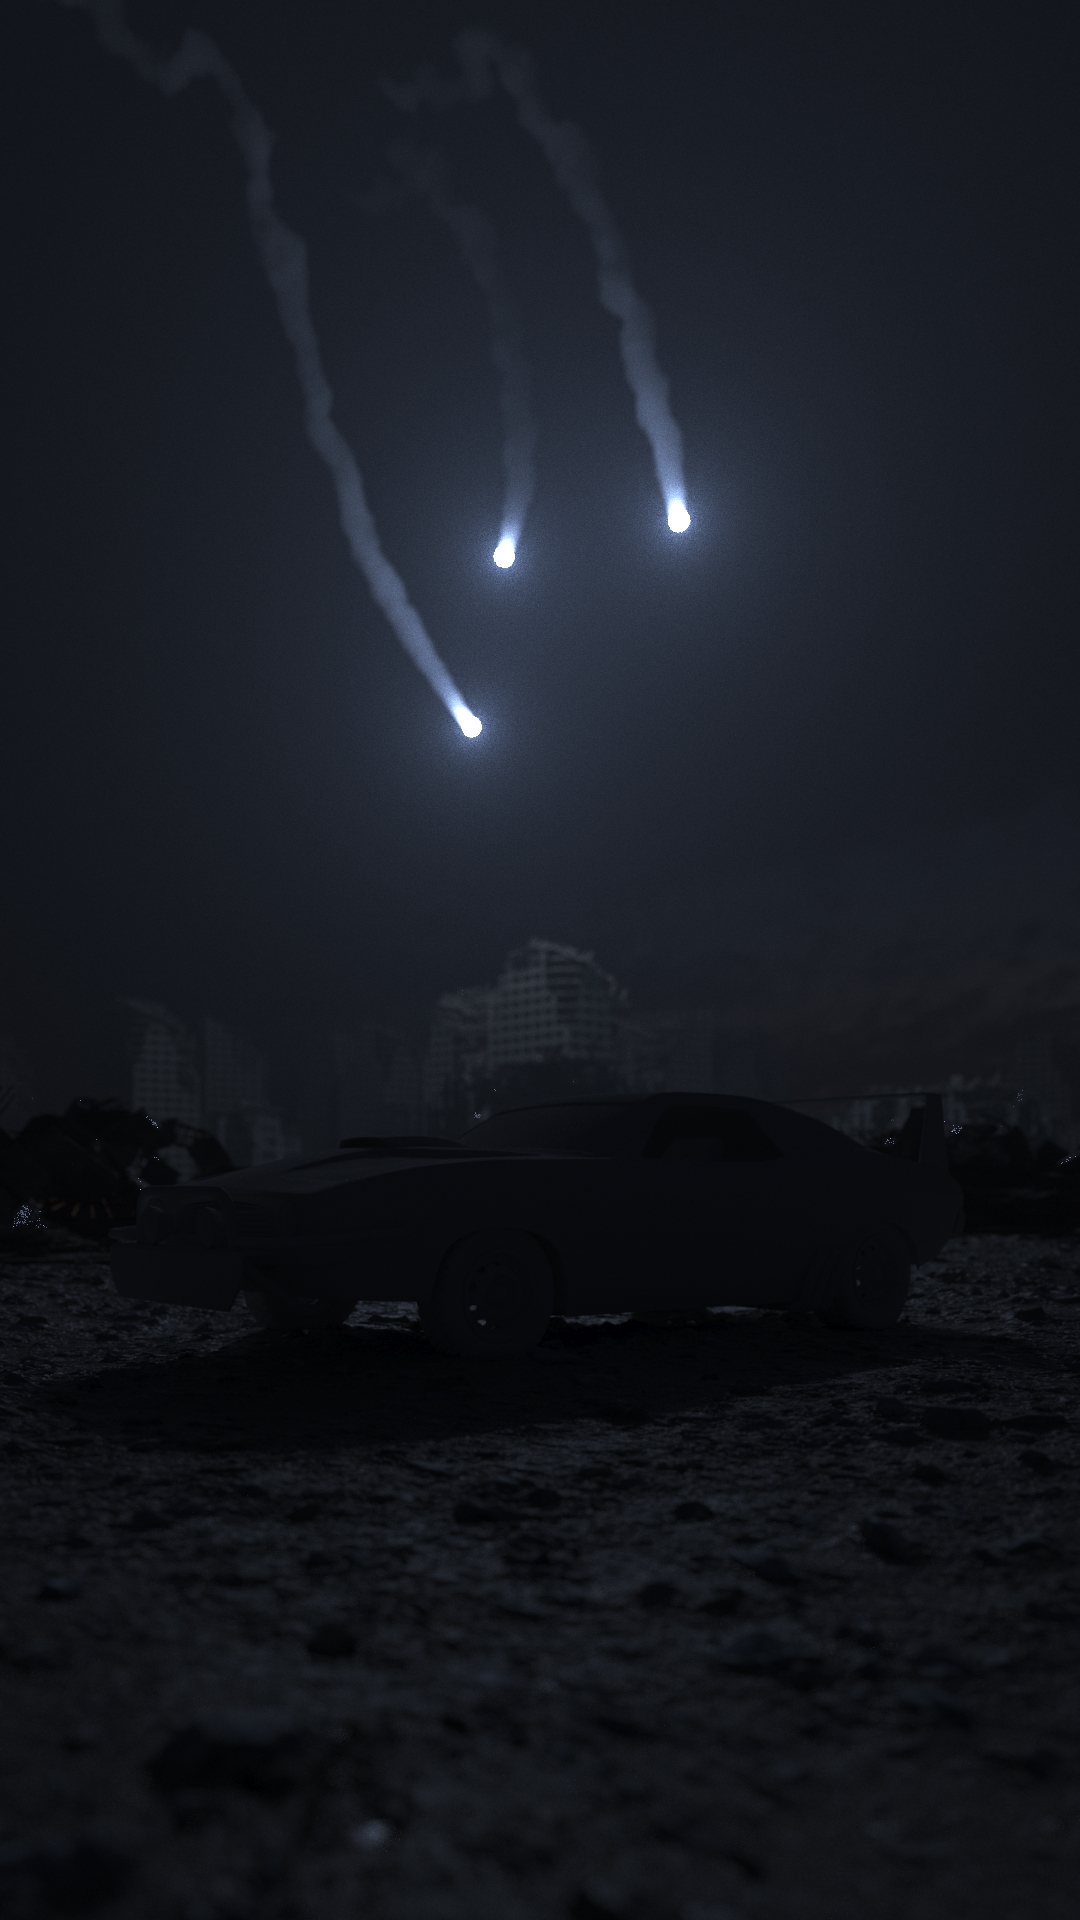 Car render challenge 2018 - Apocalypse Now!